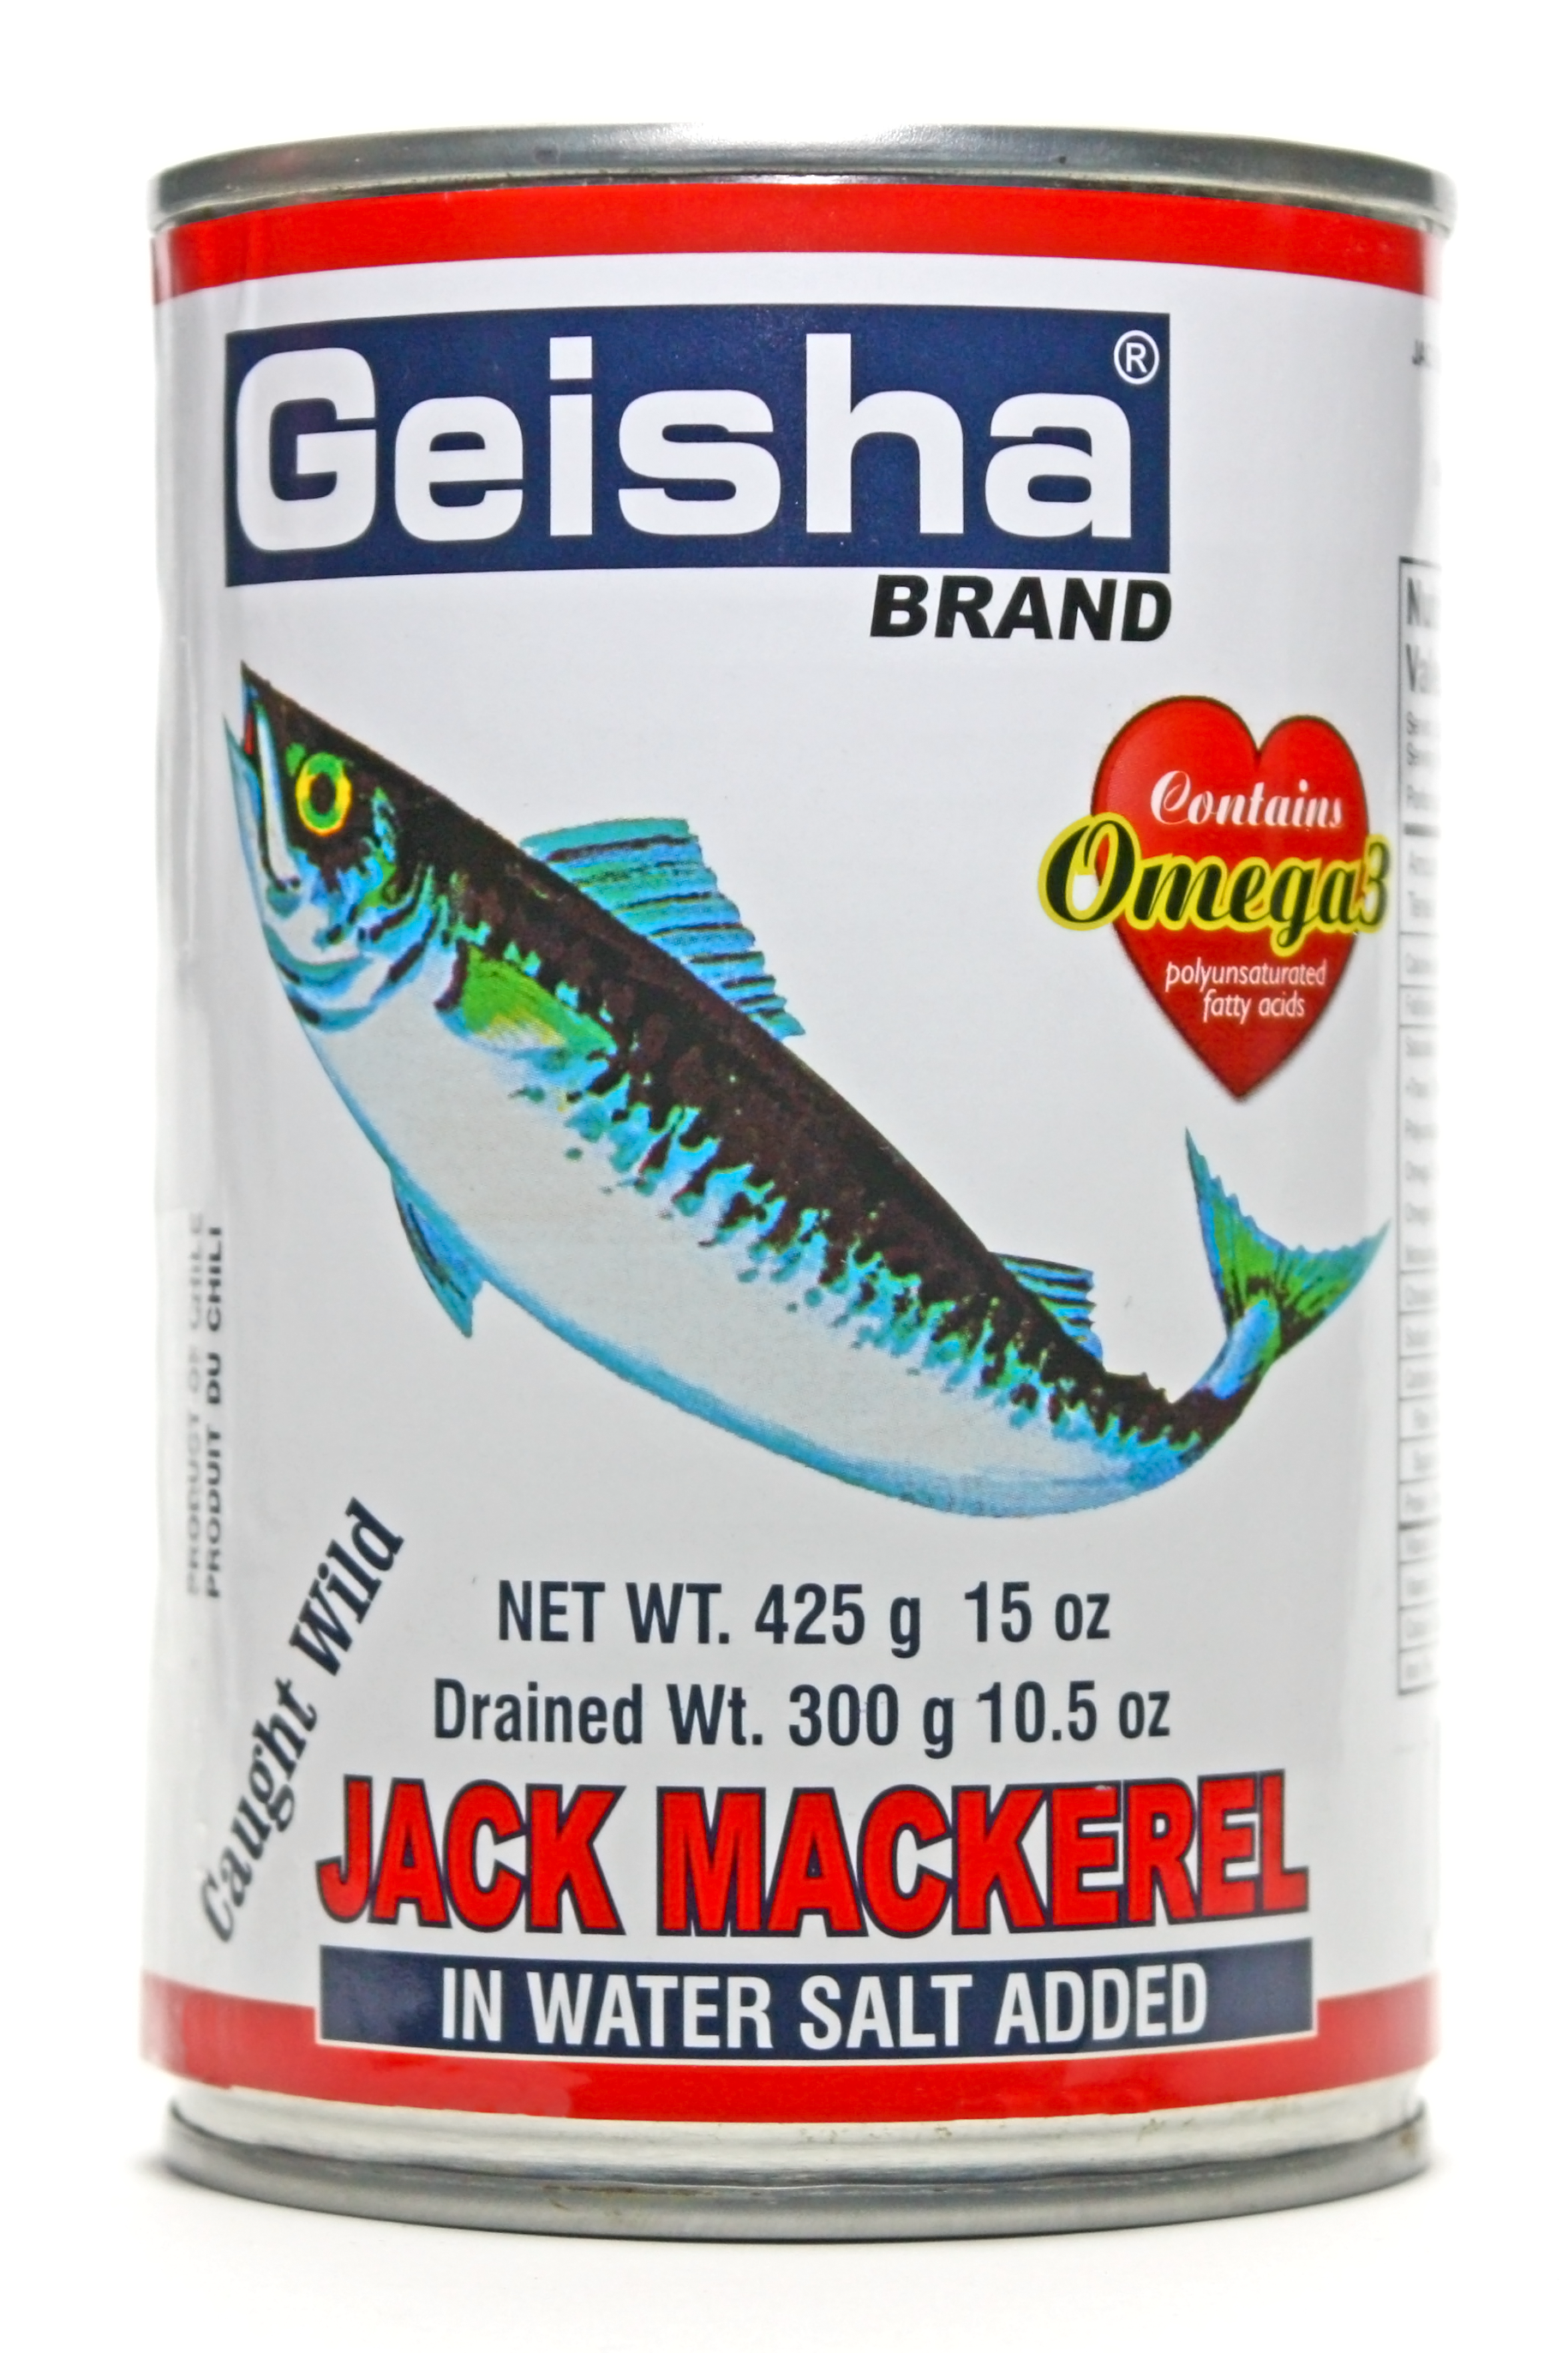 Geisha-White-Jack-Mackerel--In-Water-Salt-Added-can.png